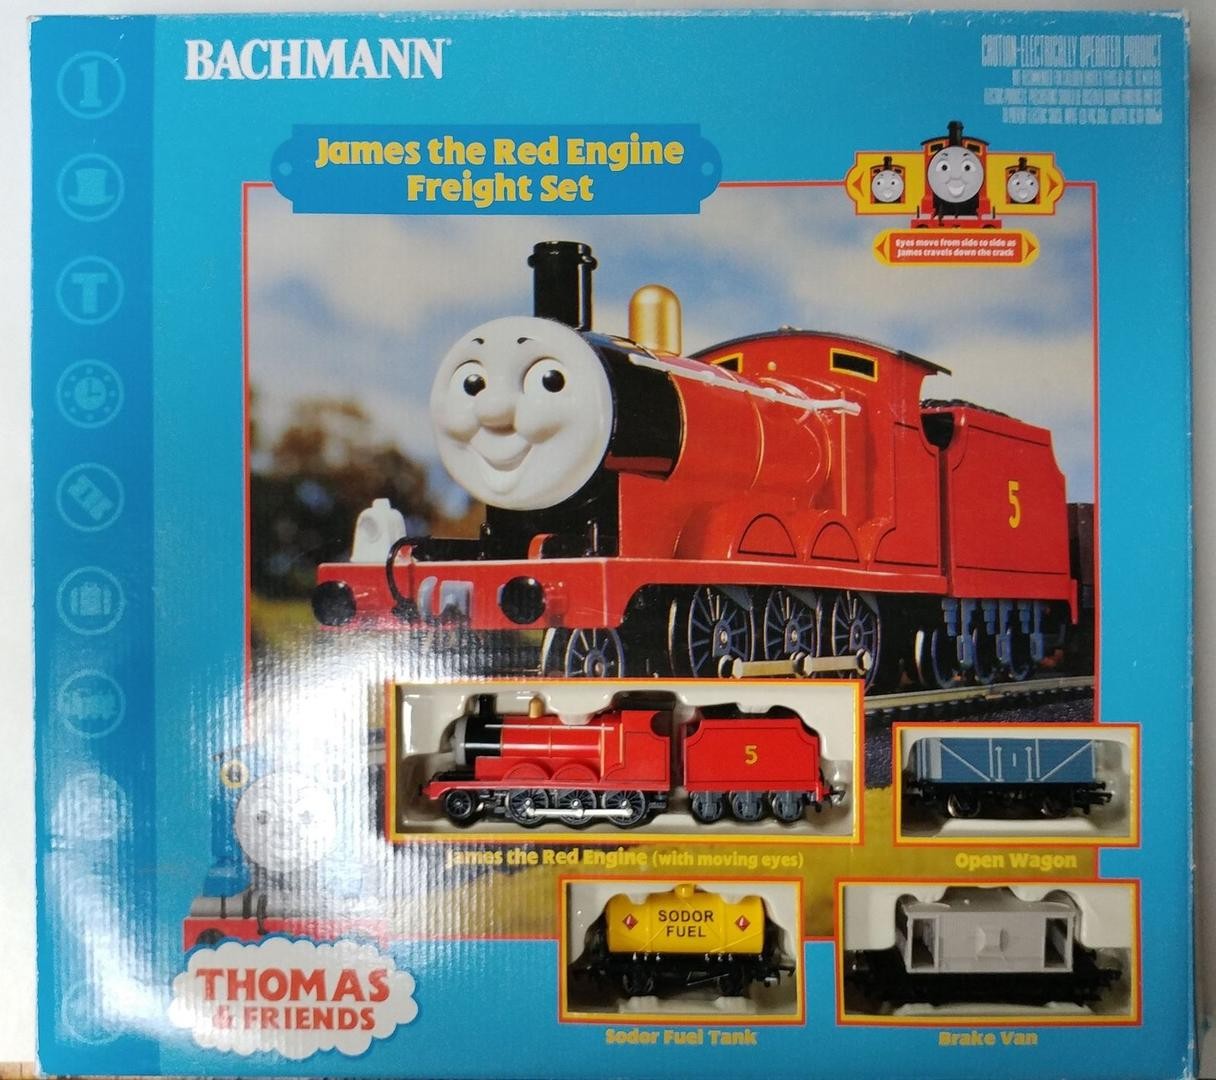  Bachmann Trains - THOMAS & FRIENDS - JAMES THE RED